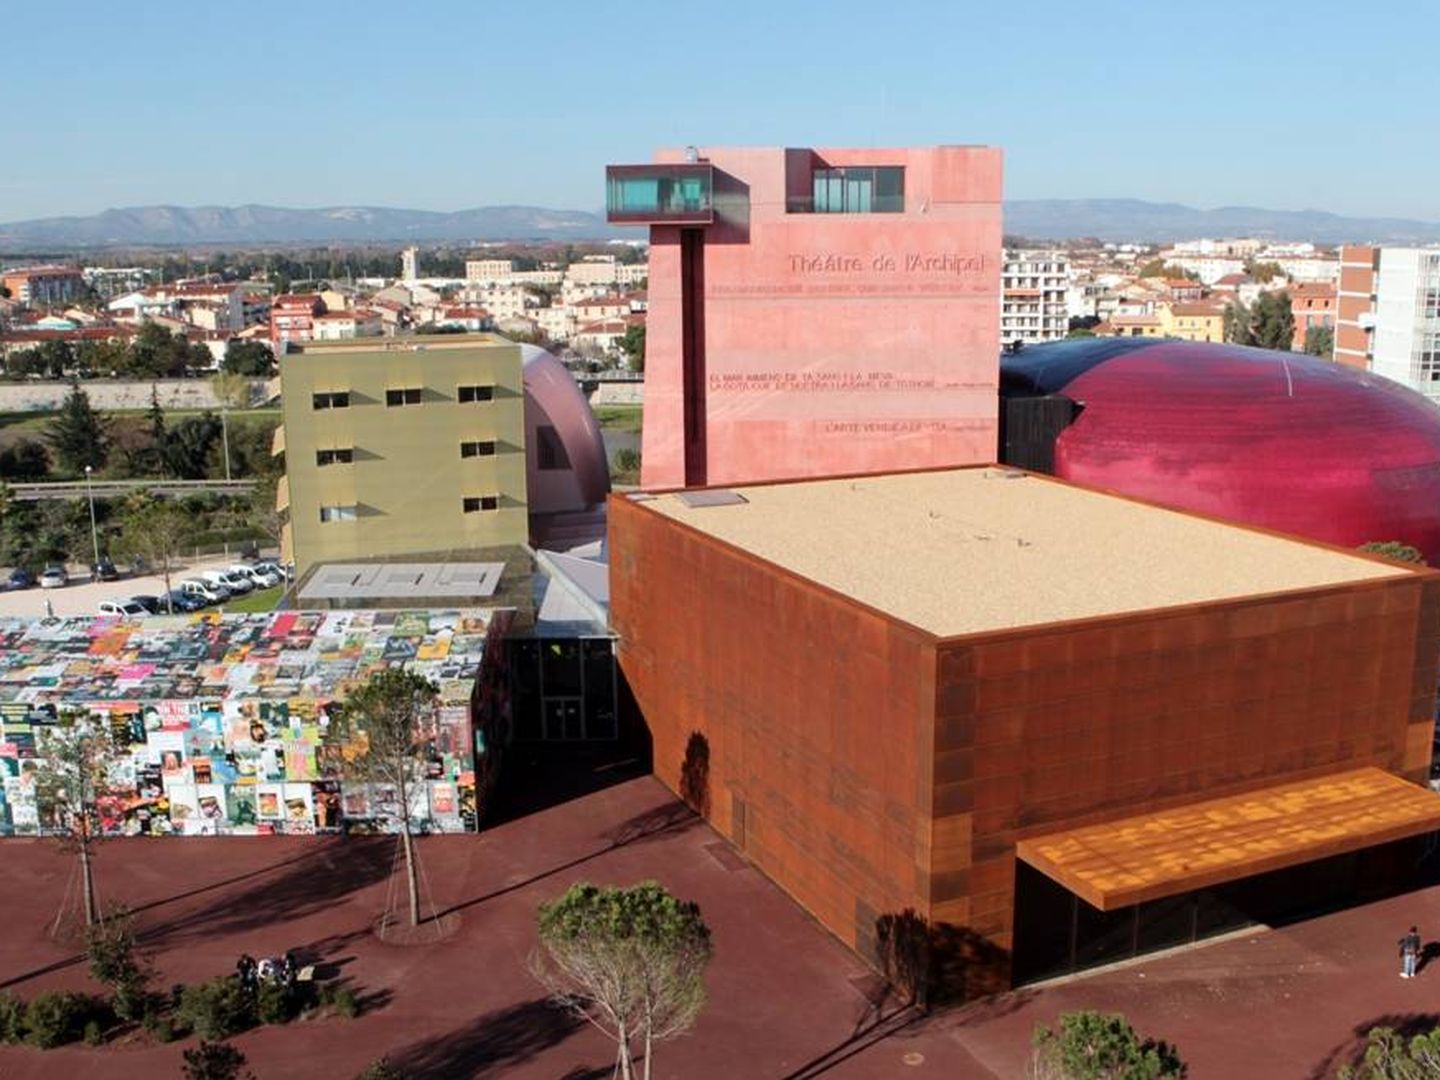 El teatro del Archipiélago, obra de Nouvel. (Foto: Turismo de Perpiñán)